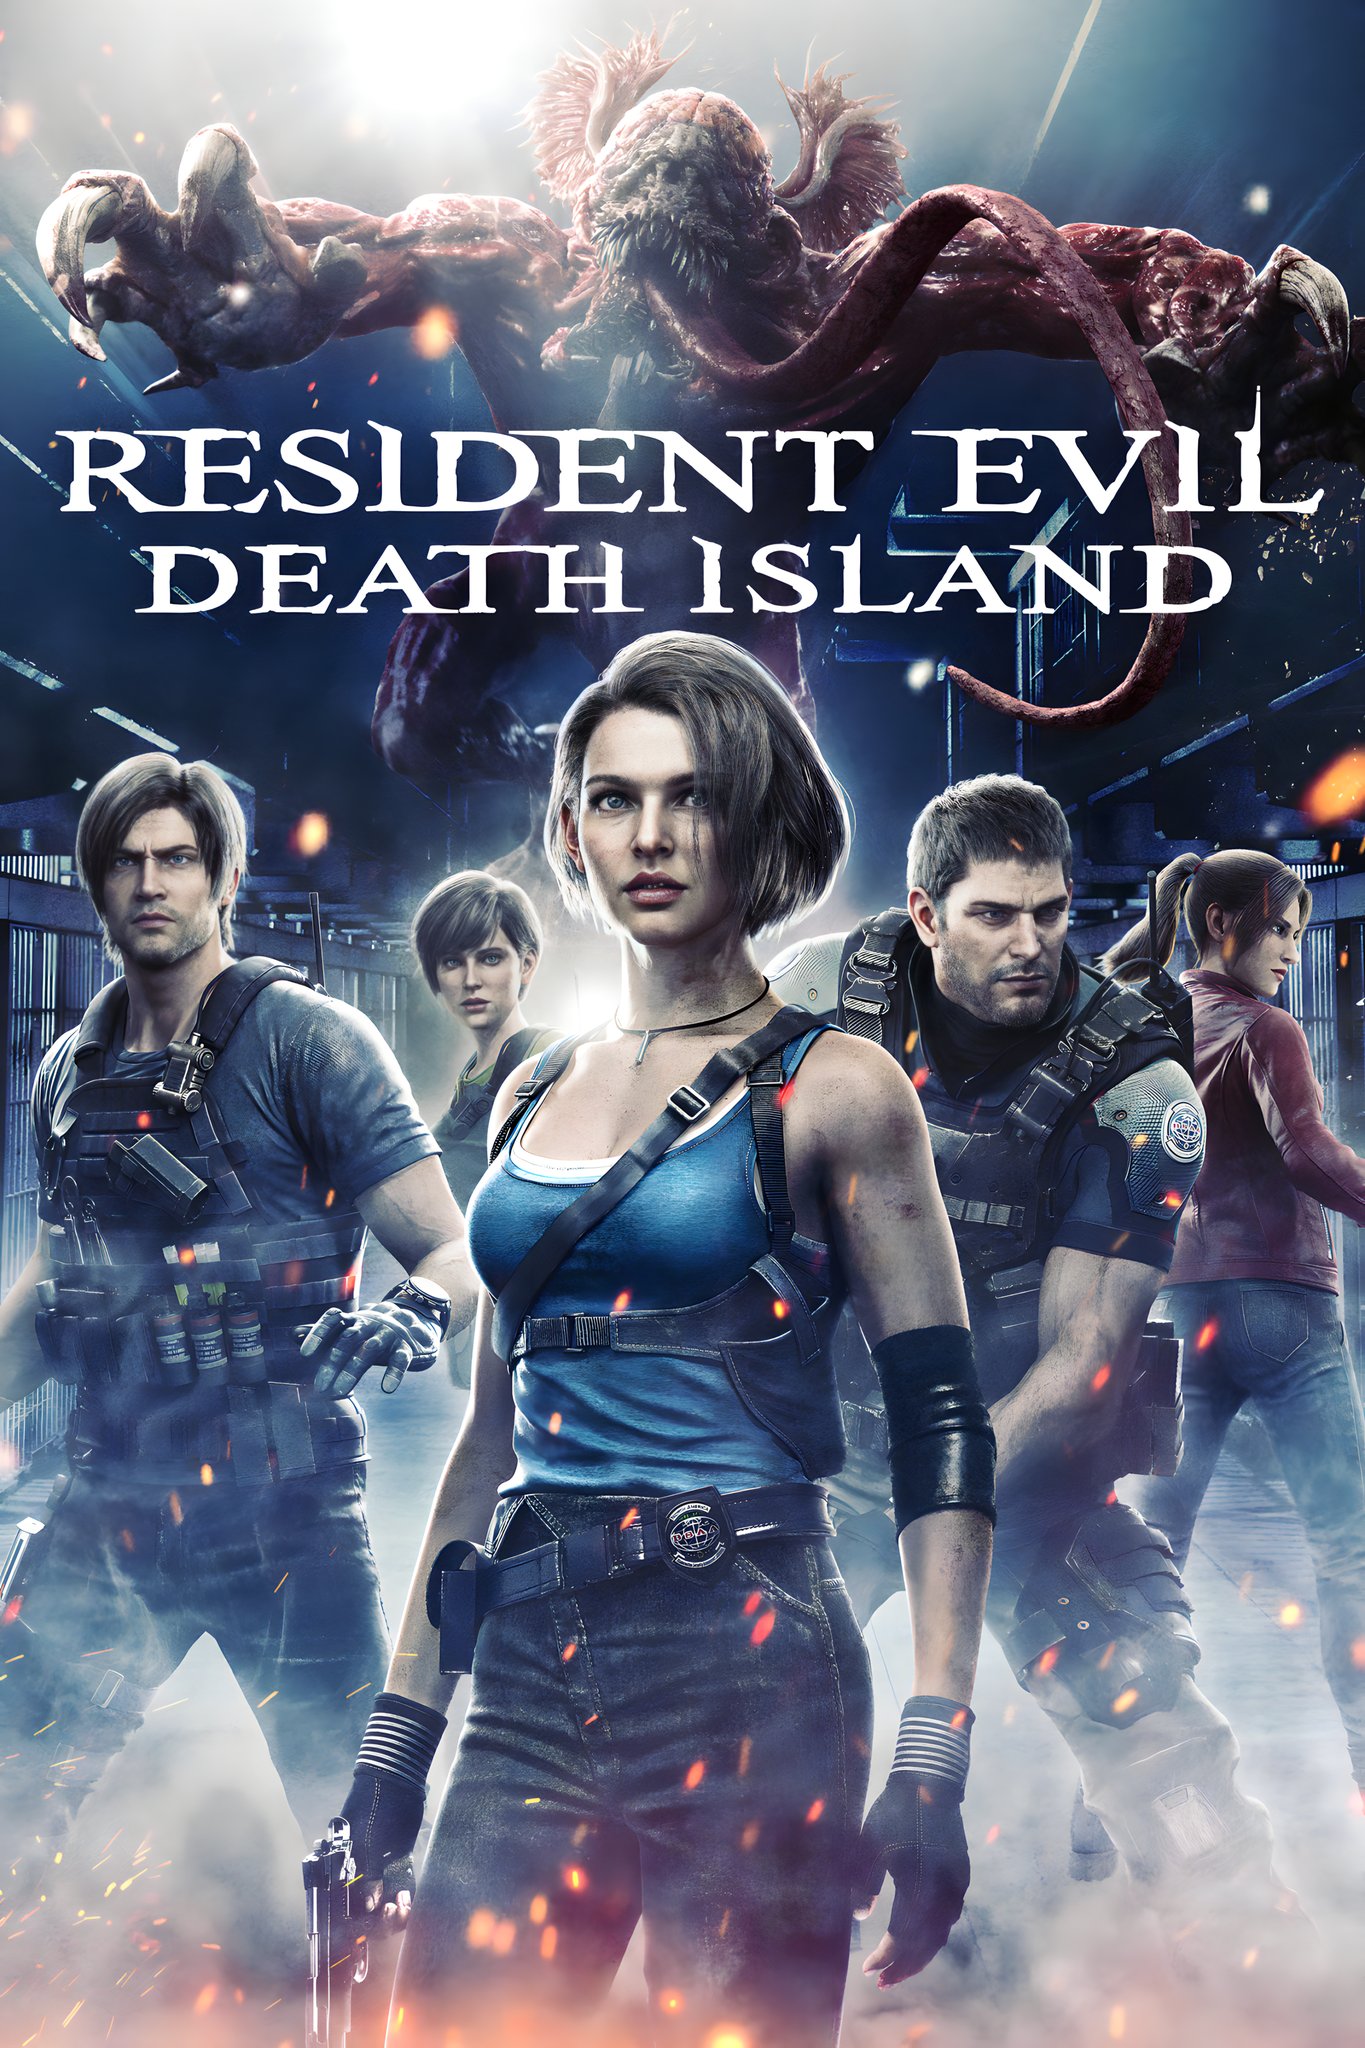 Resident Evil Death Island trailer & poster